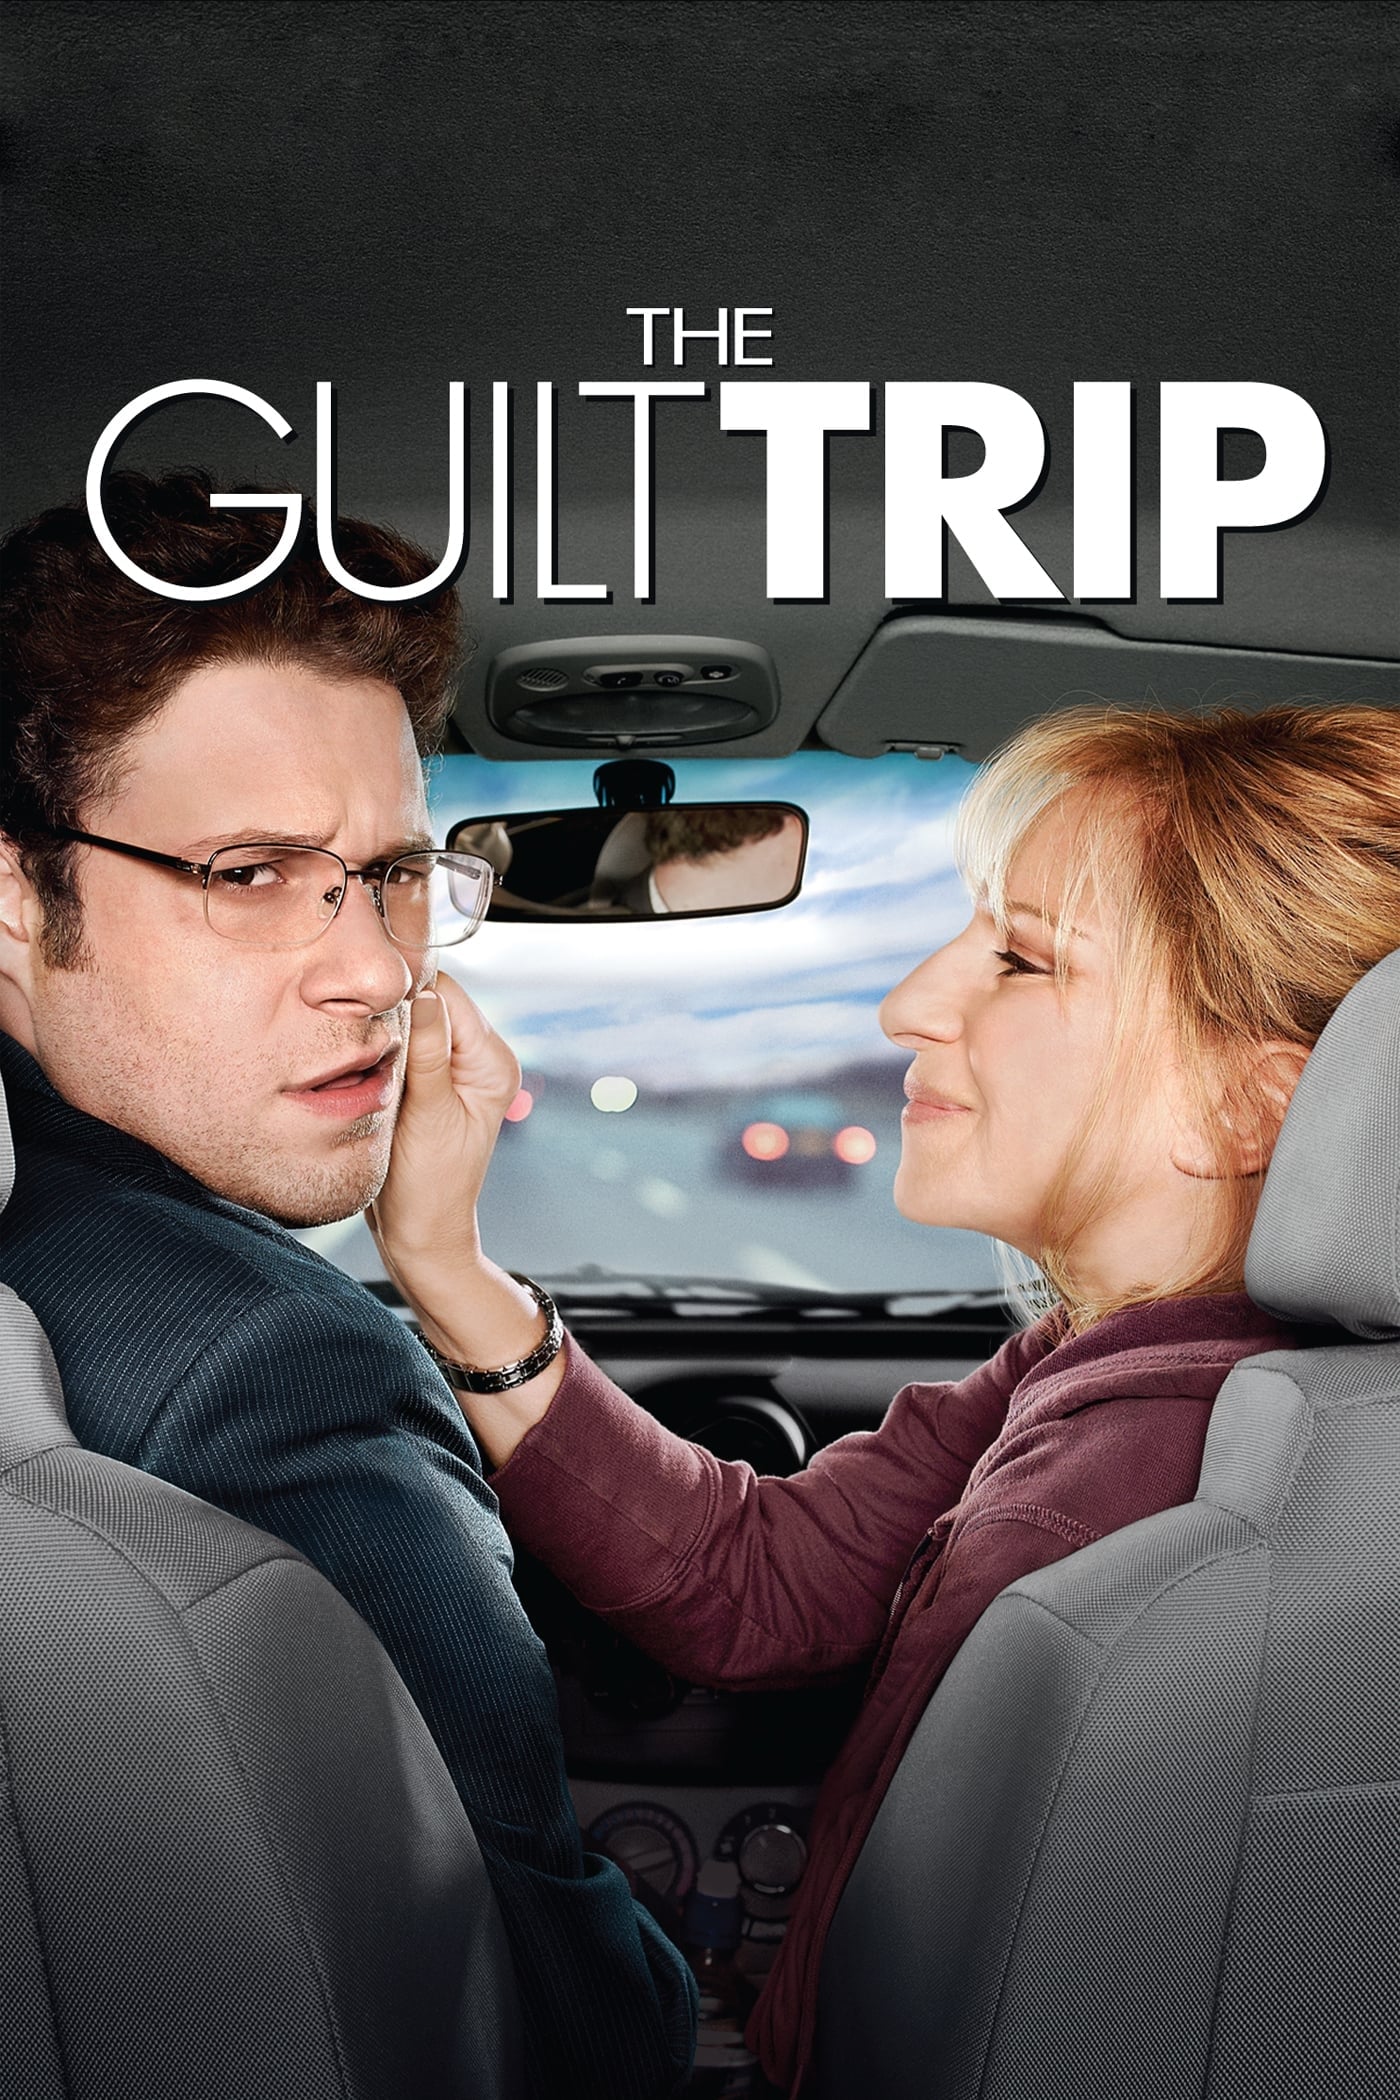 guilt trip book ending